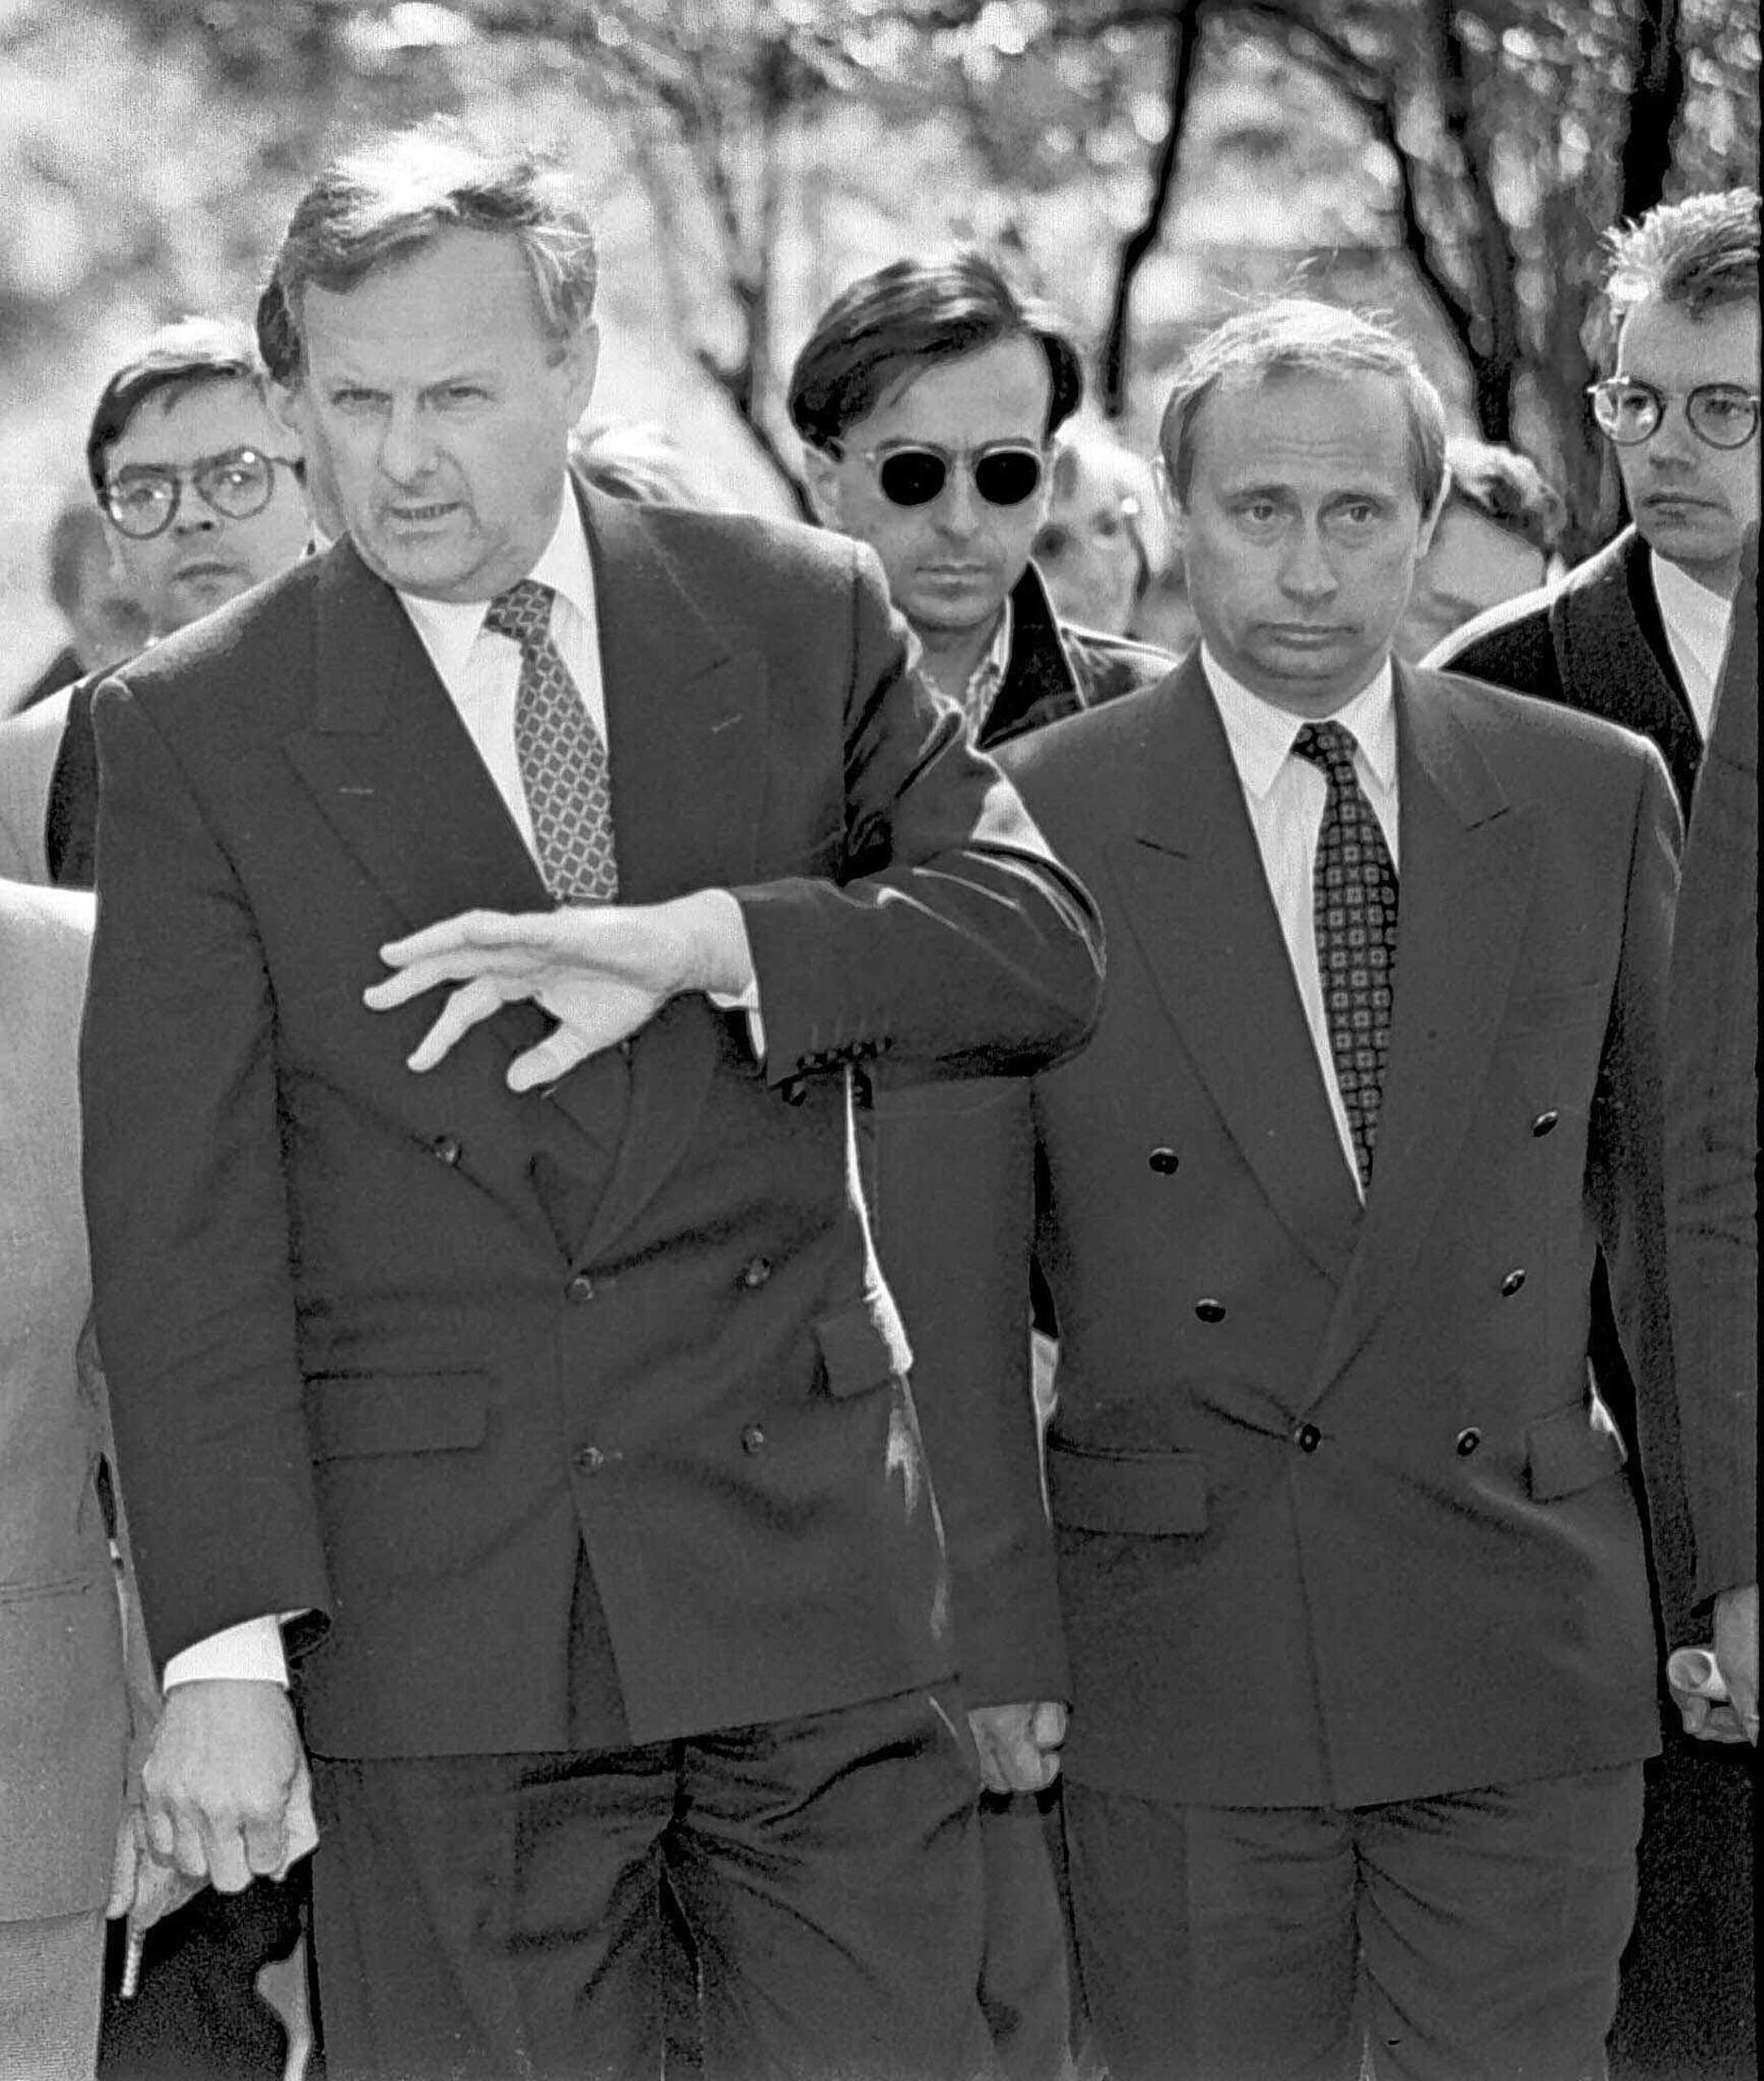 Then-deputy mayor in St. Petersburg Vladimir Putin with then-mayor Anatoly Sobchak in 1994.